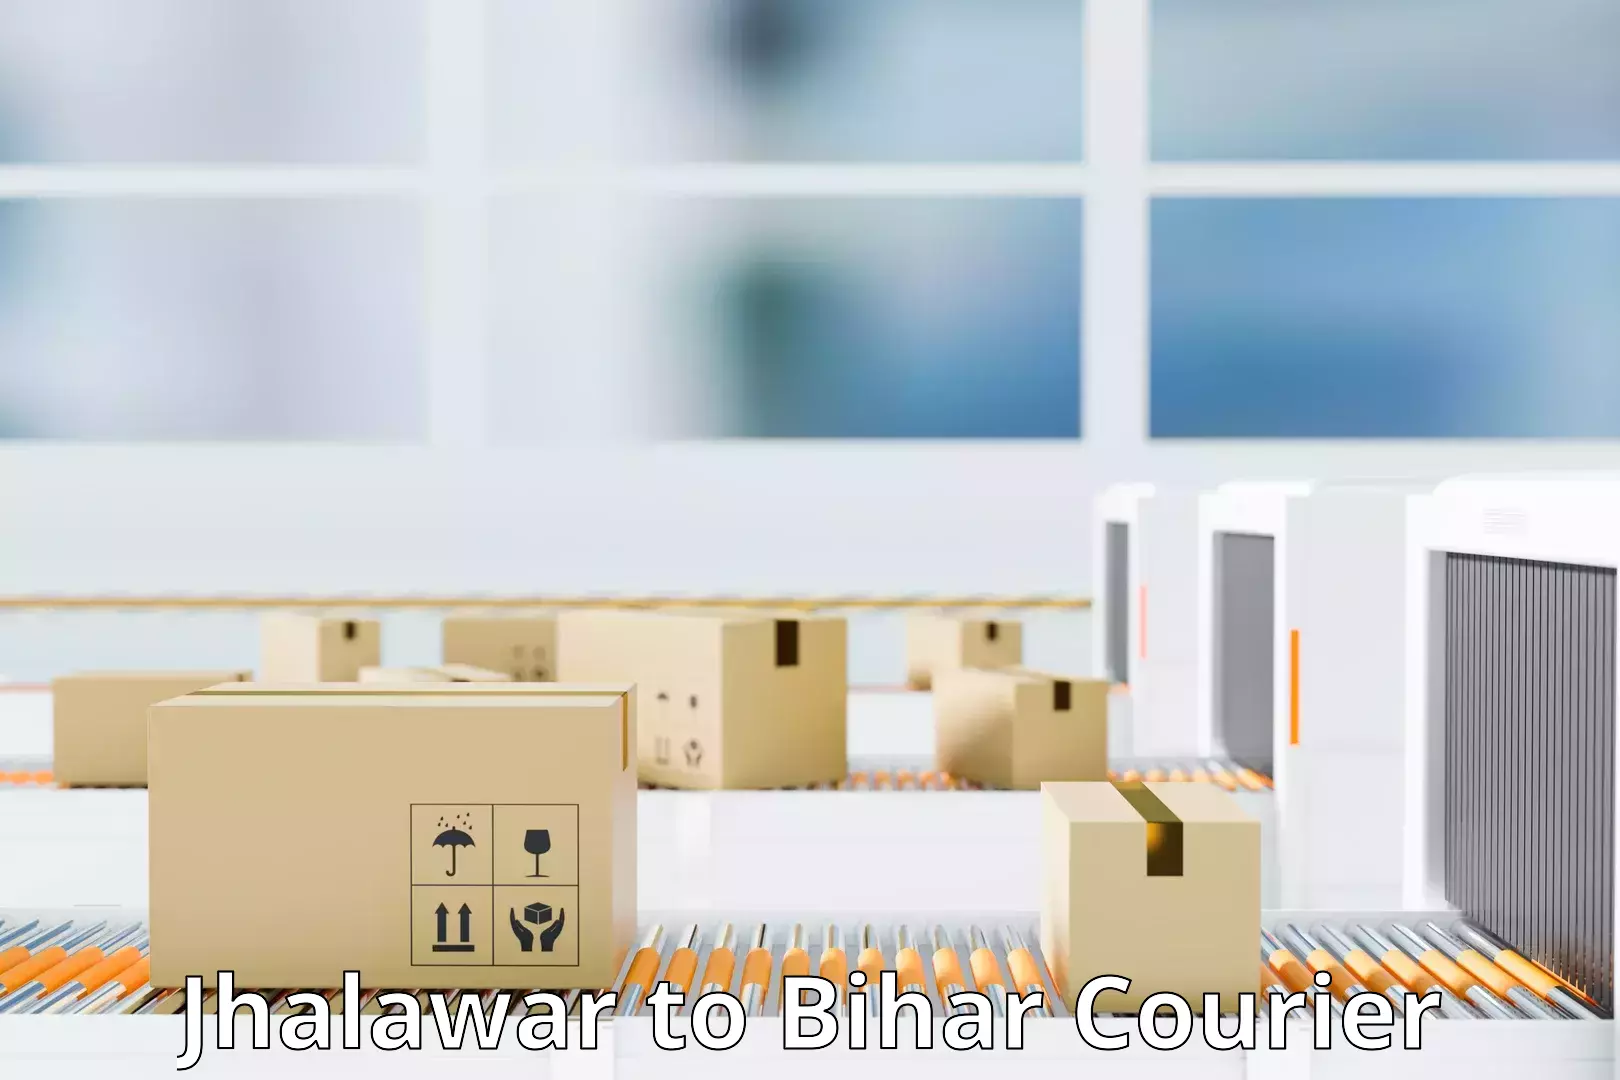 Enhanced tracking features in Jhalawar to Bihar